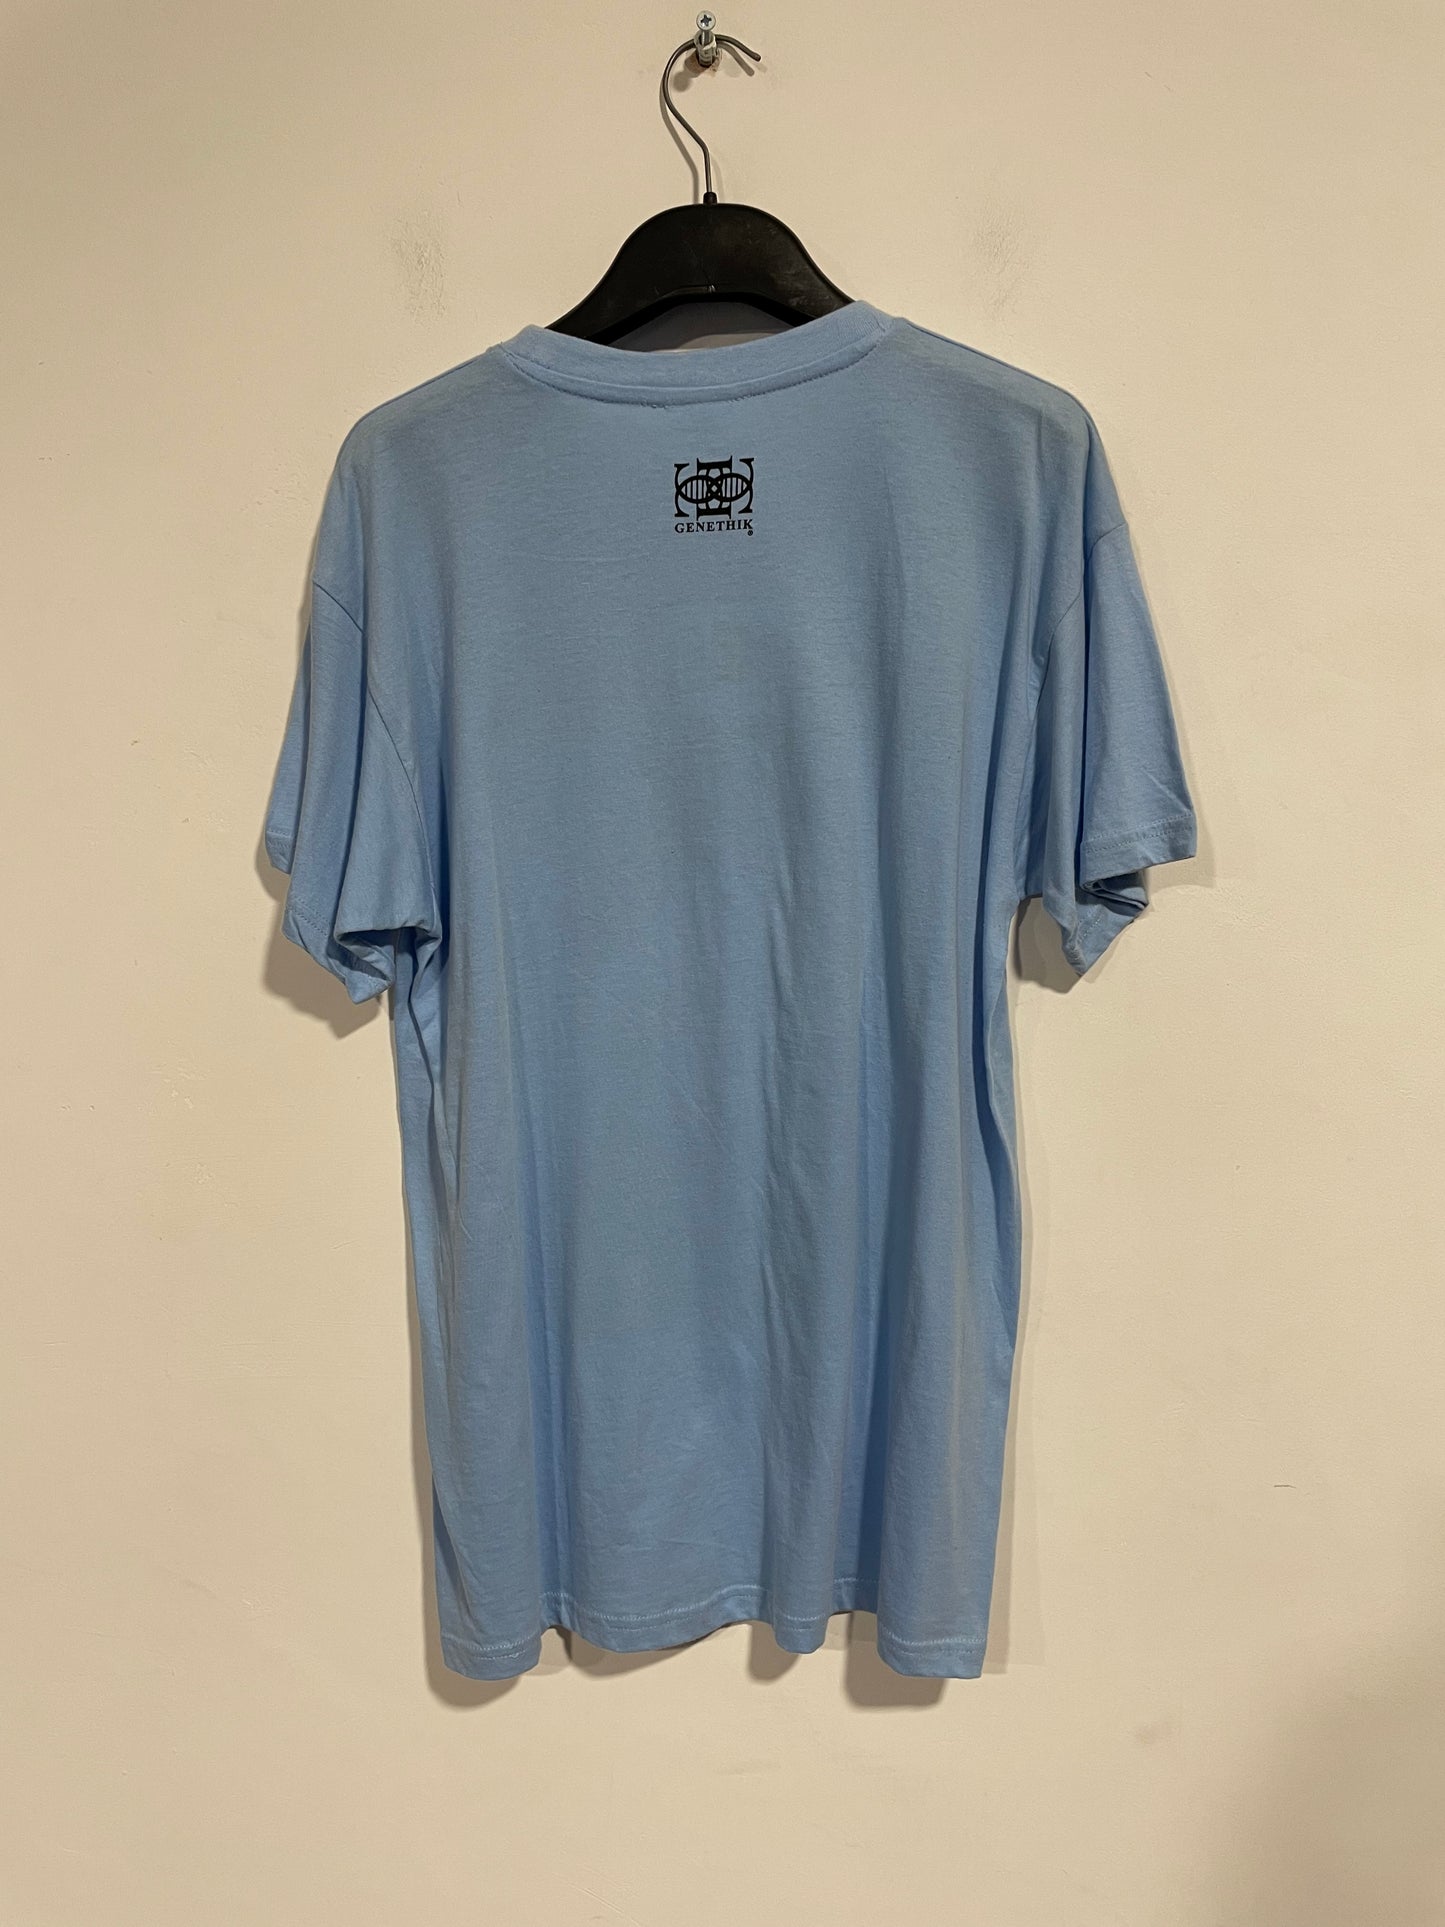 T shirt Genethik vecchia collezione Gufo azzurro